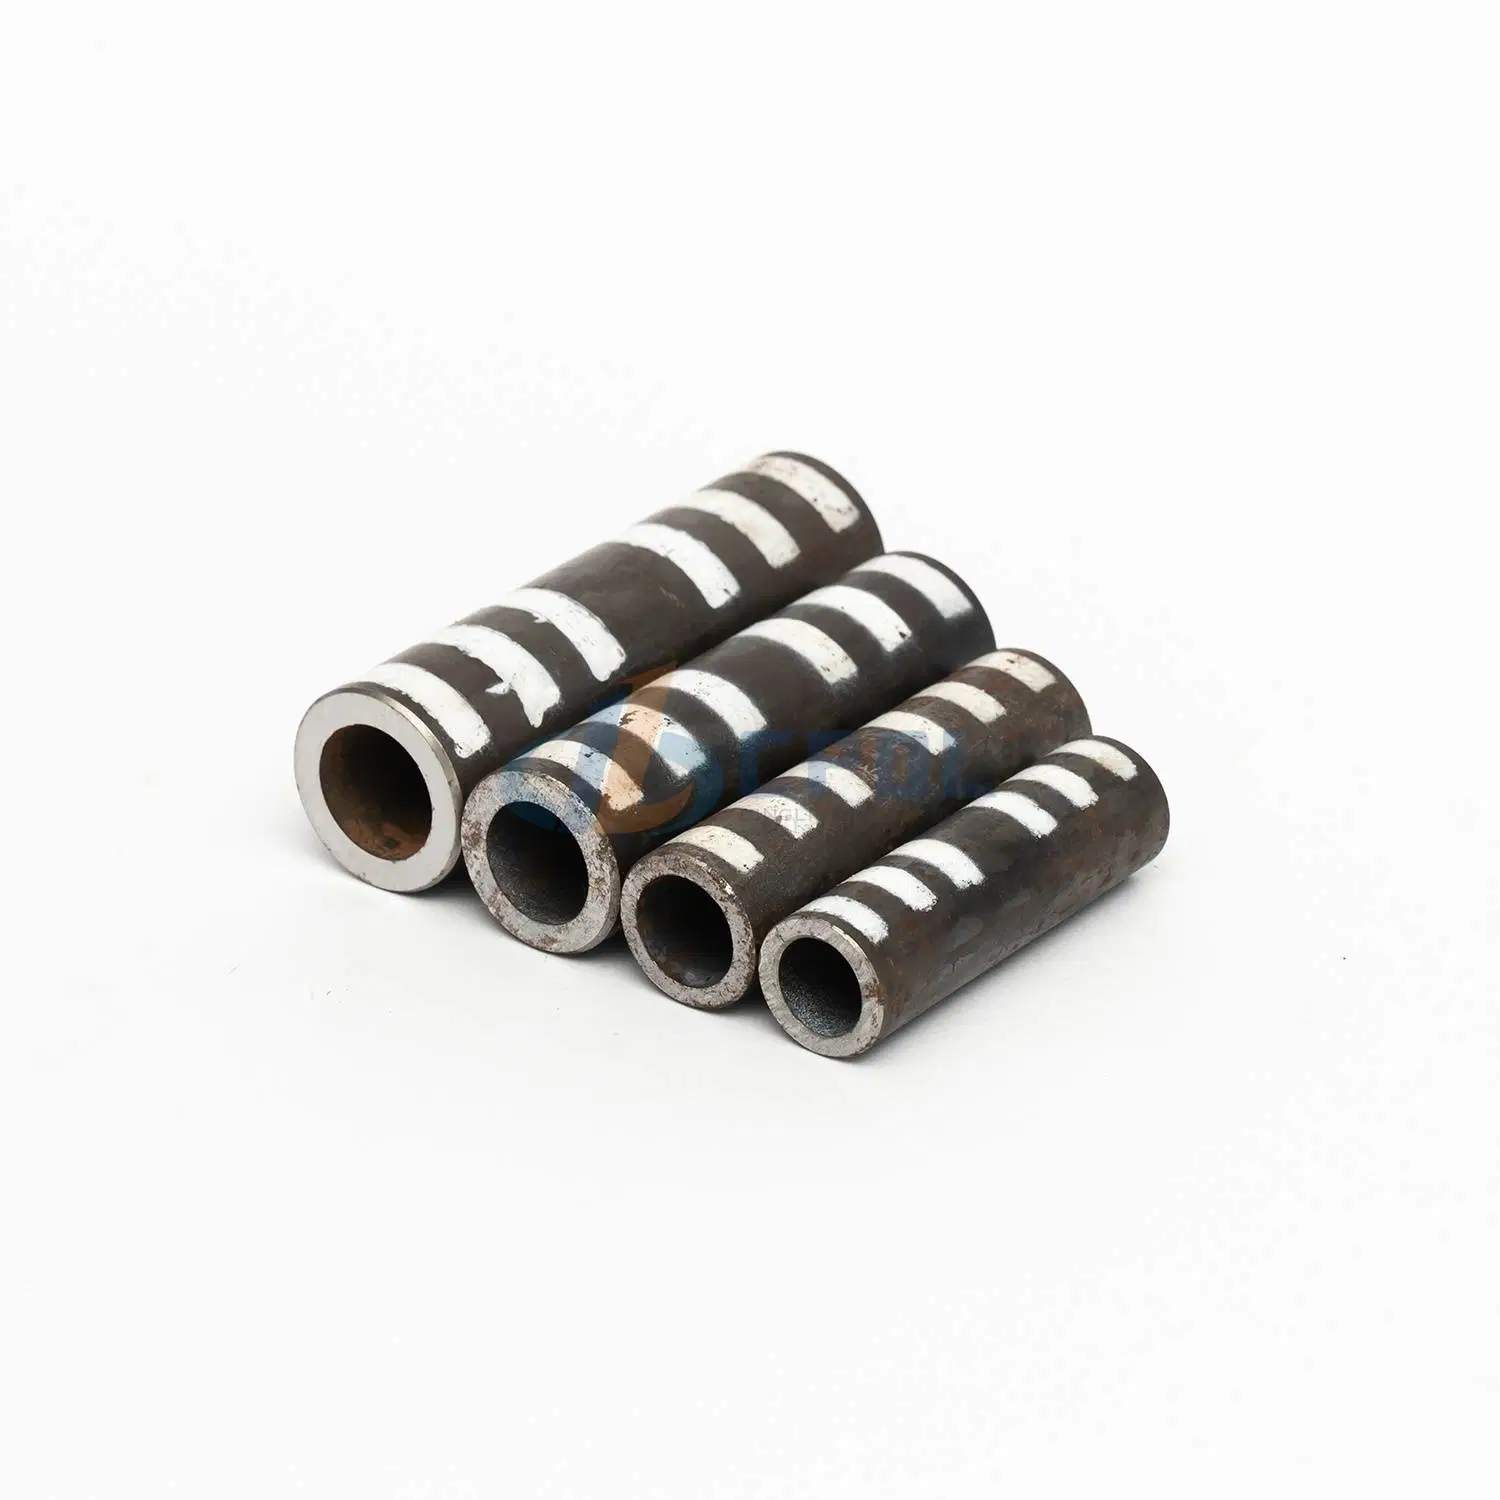 Rebar Bolt Lock Coupler of Carbon Steel Material